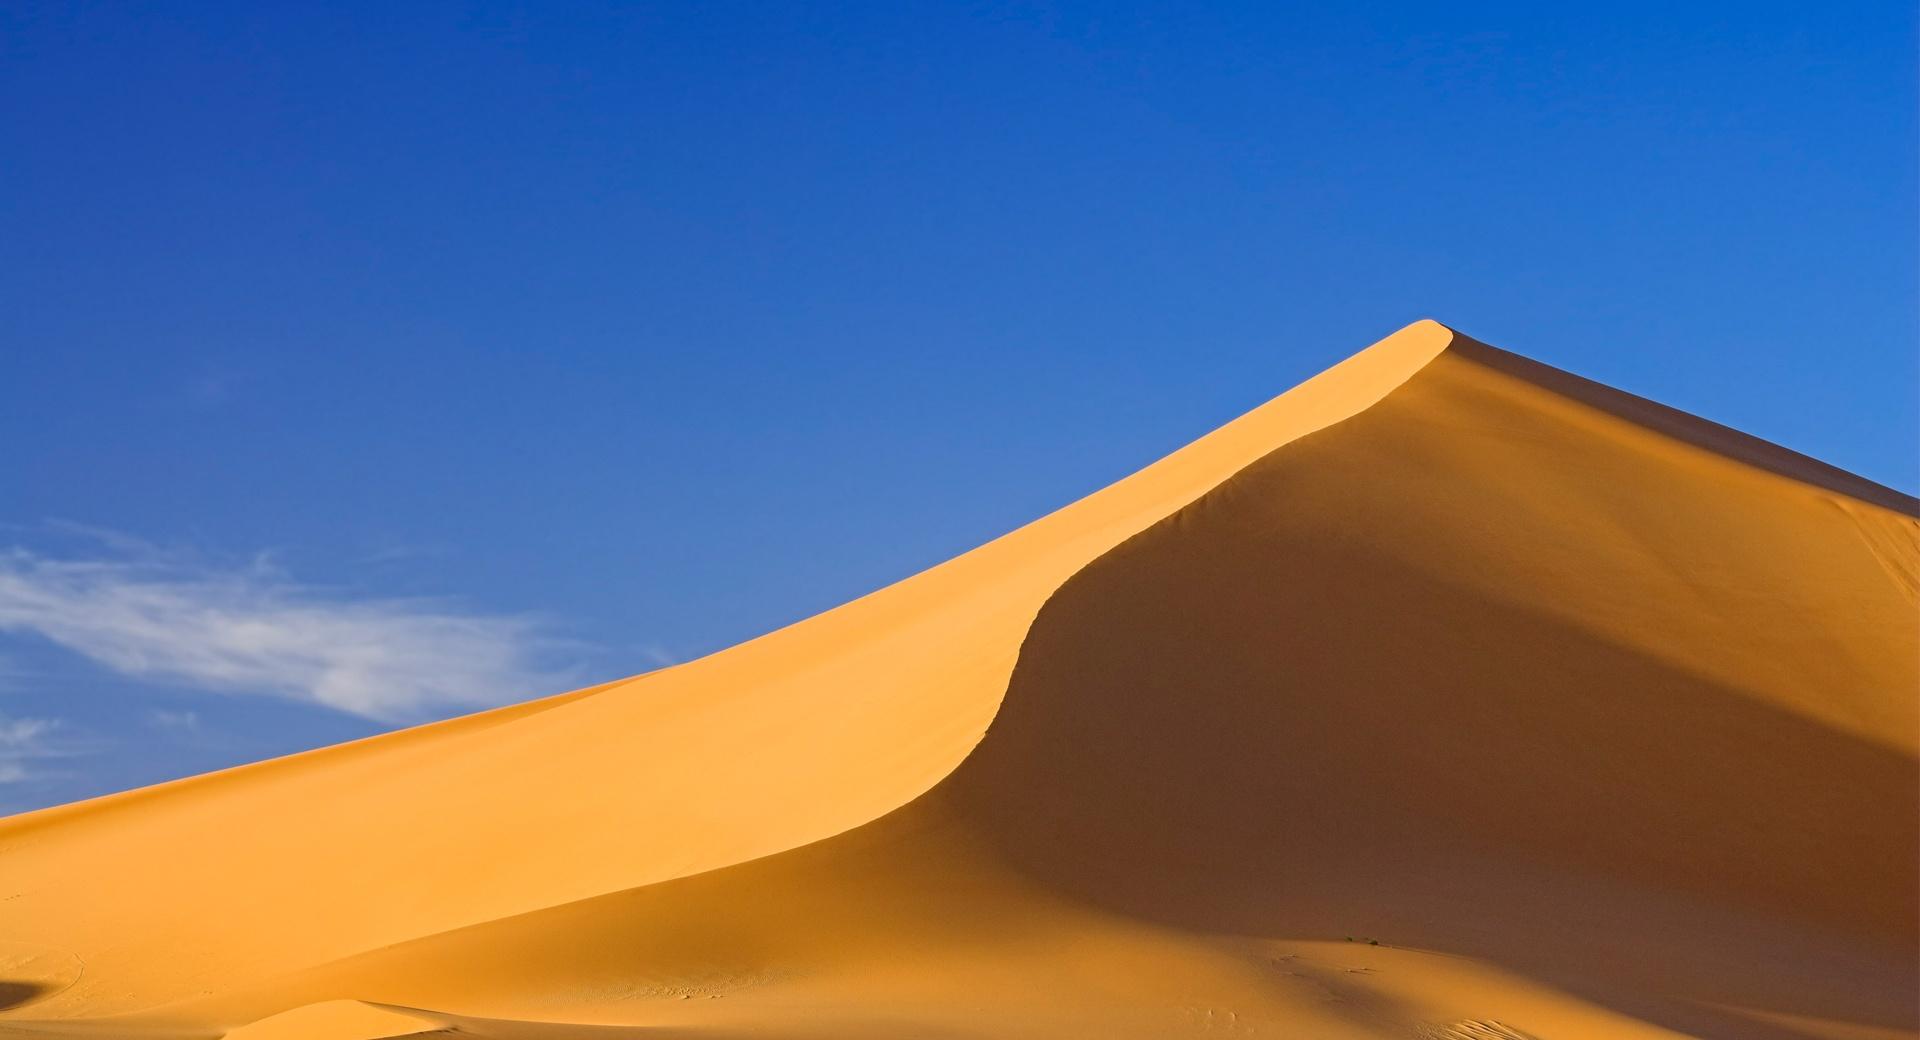 Sand Dunes Jabal Akakus Libya at 1334 x 750 iPhone 7 size wallpapers HD quality